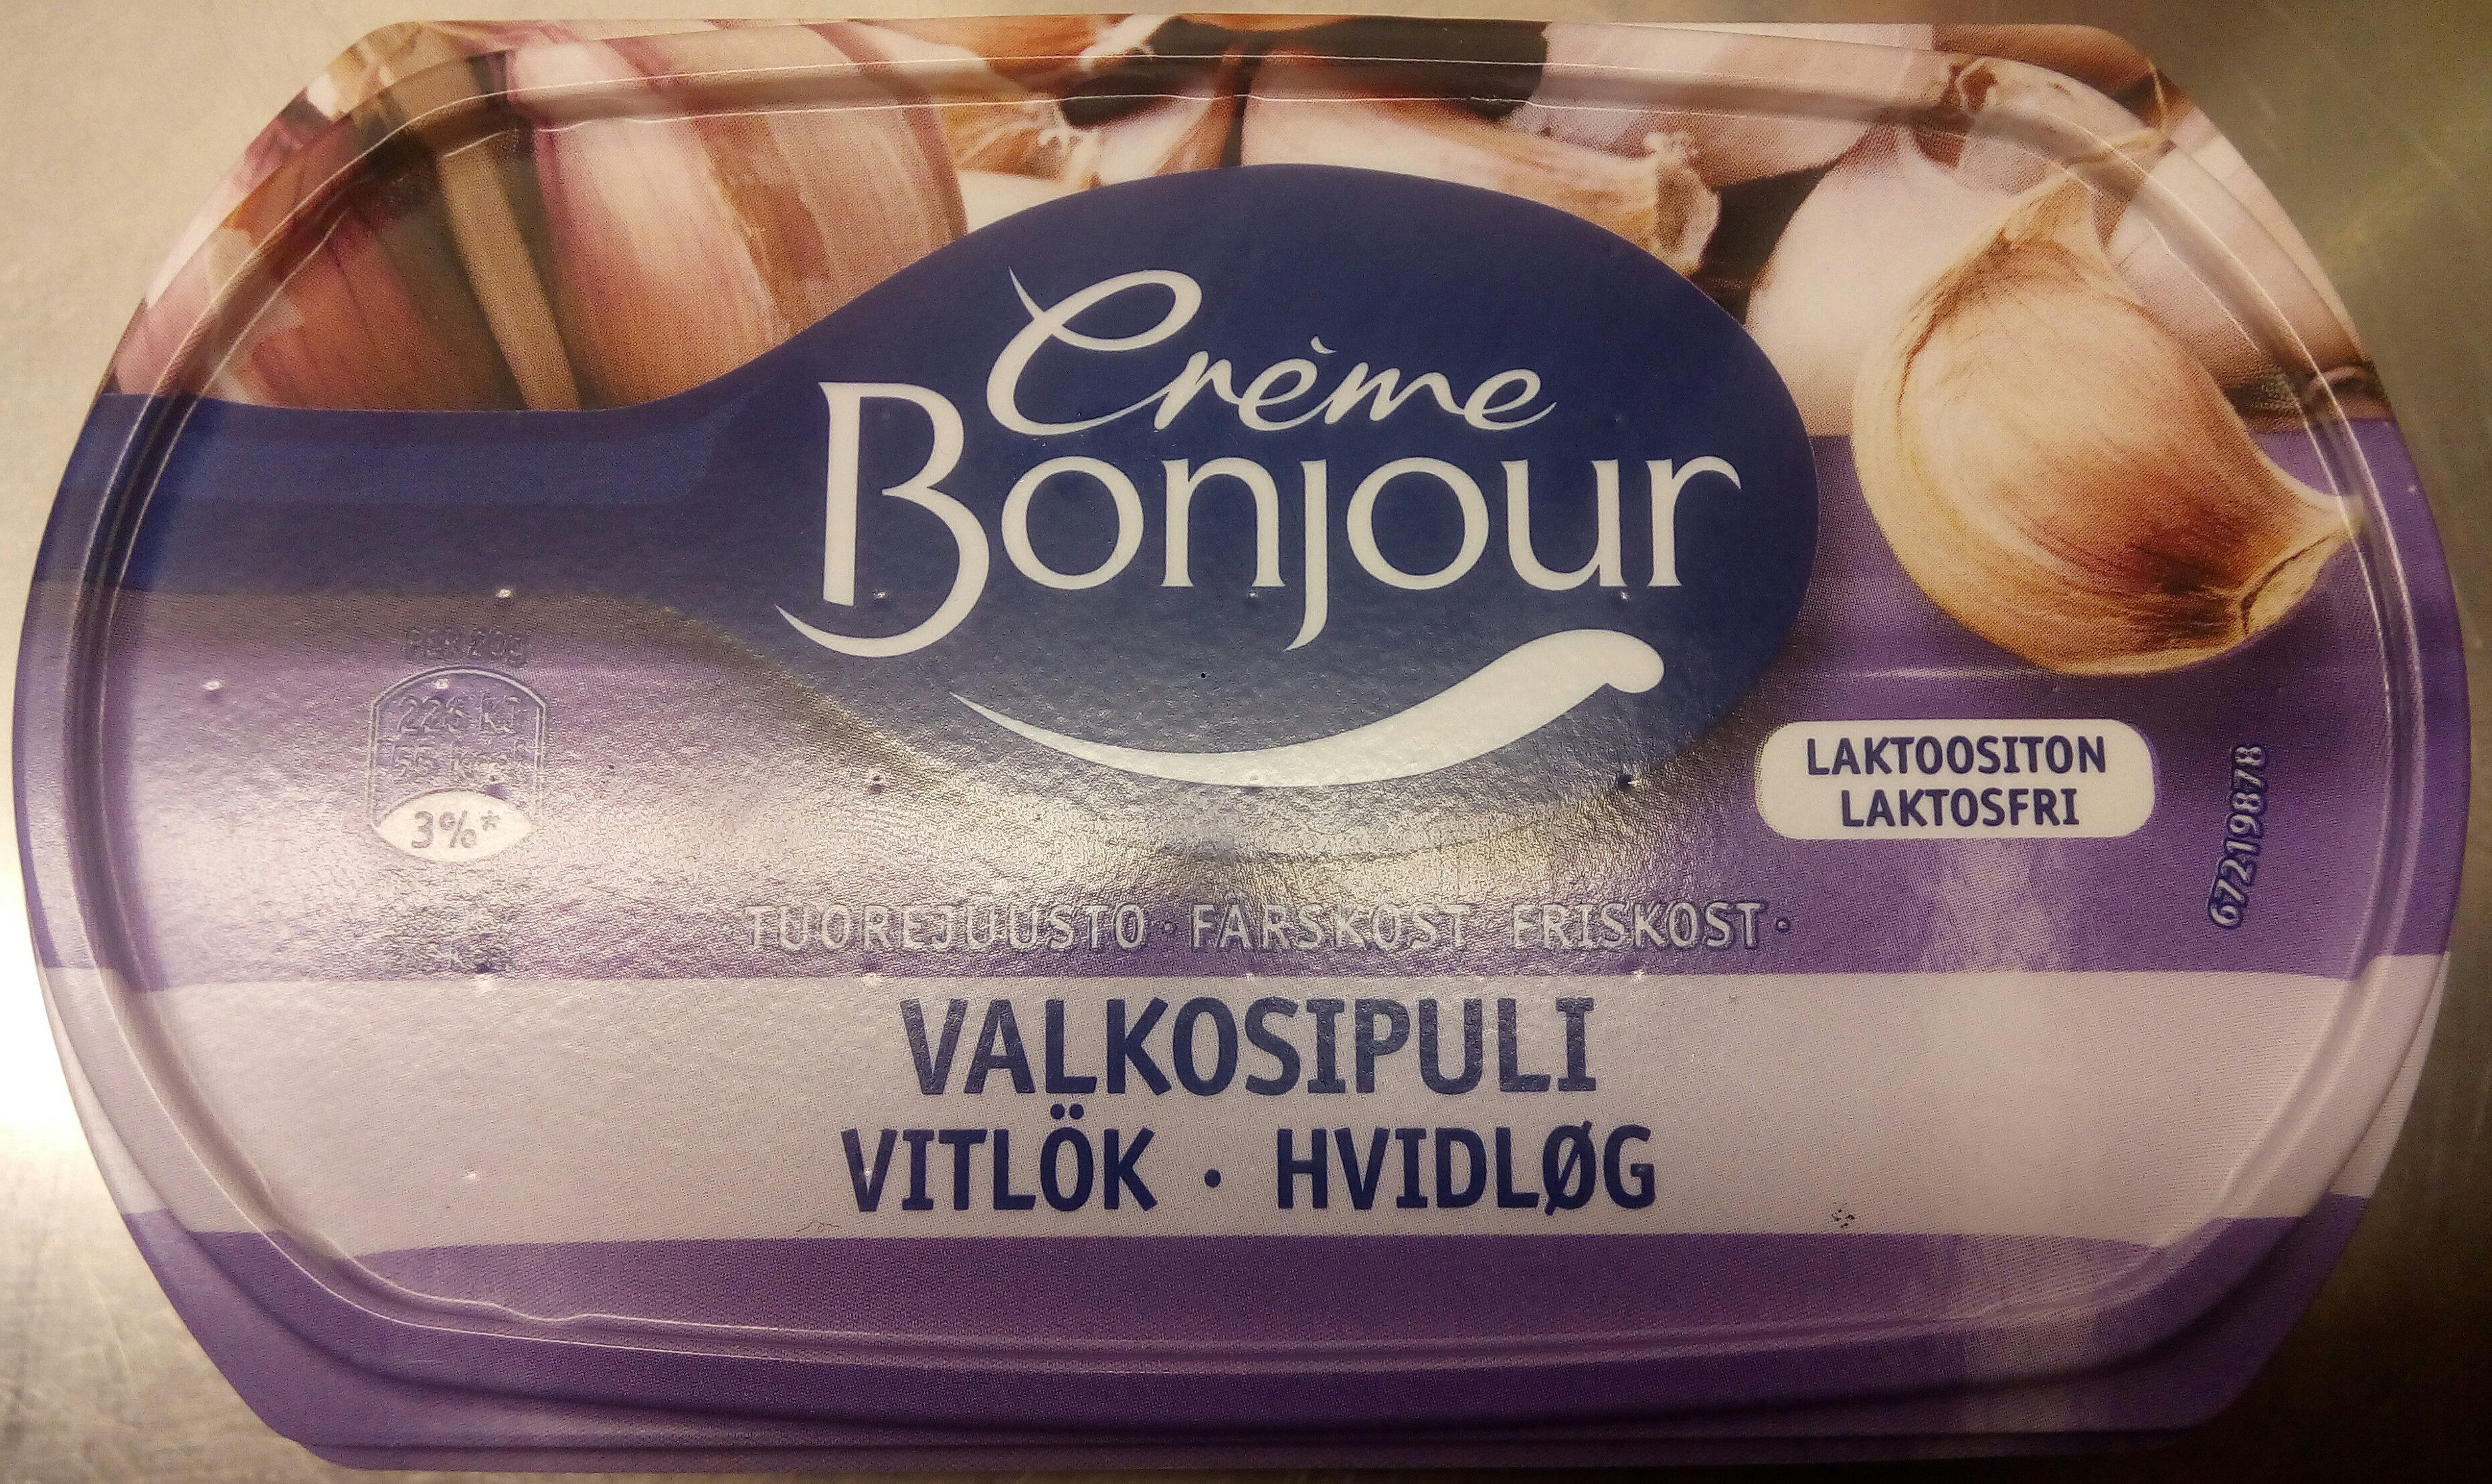 Crème Bonjour laktosfri färskost vitlök - Produkt - sv